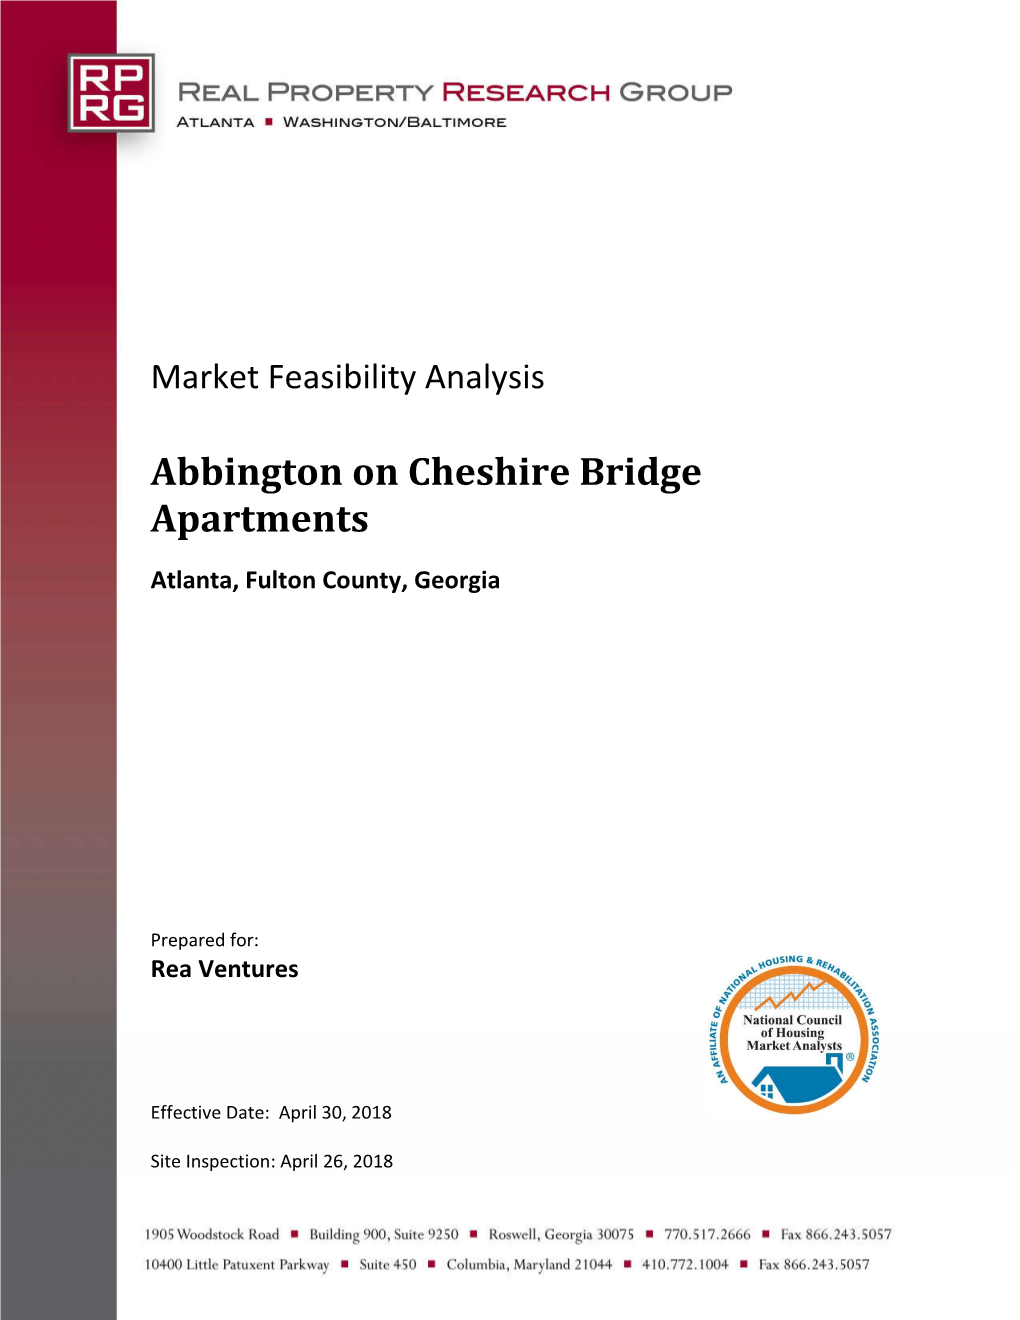 Abbington on Cheshire Bridge Apartments